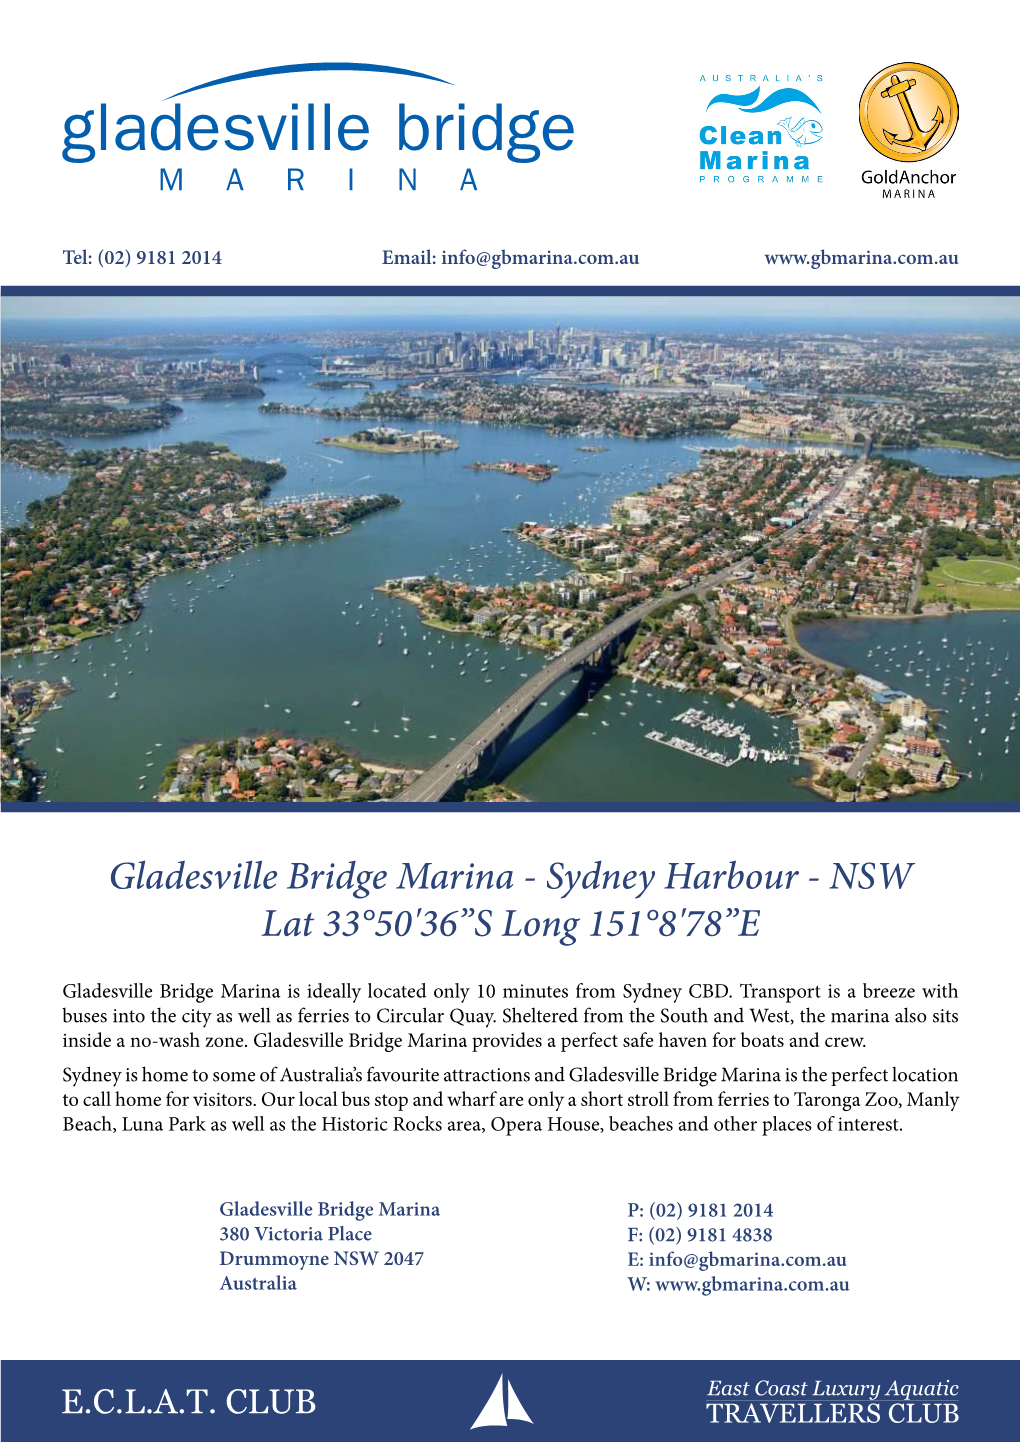 Gladesville Bridge Marina - Sydney Harbour - NSW Lat 33°50'36”S Long 151°8'78”E